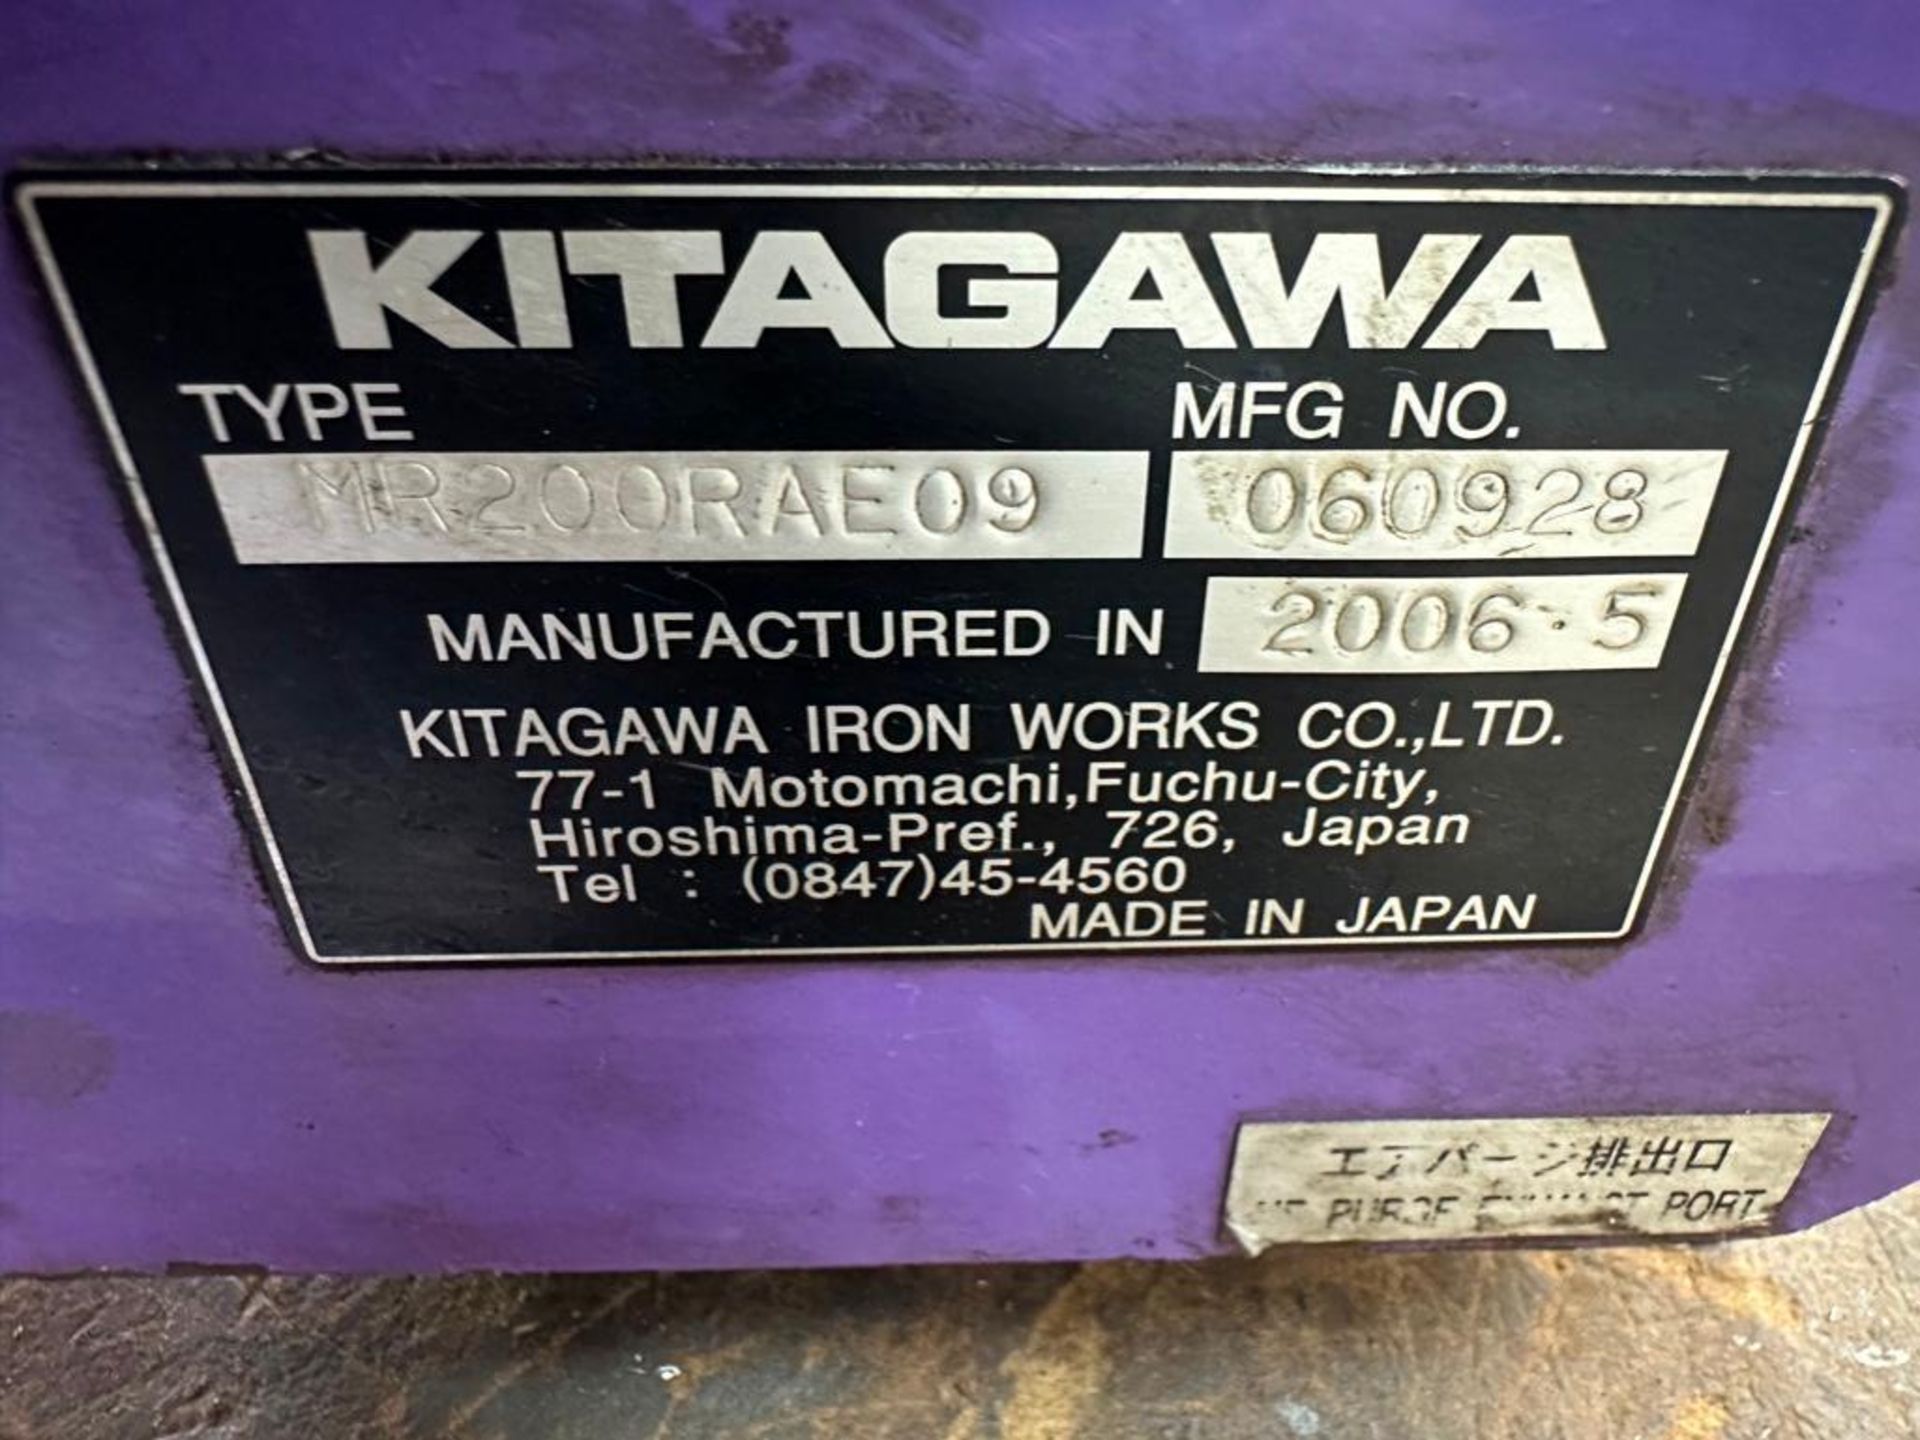 Kitagawa MR200RAE09, 8” 4th Axis Rotary Table, s/n 060928, New 2006